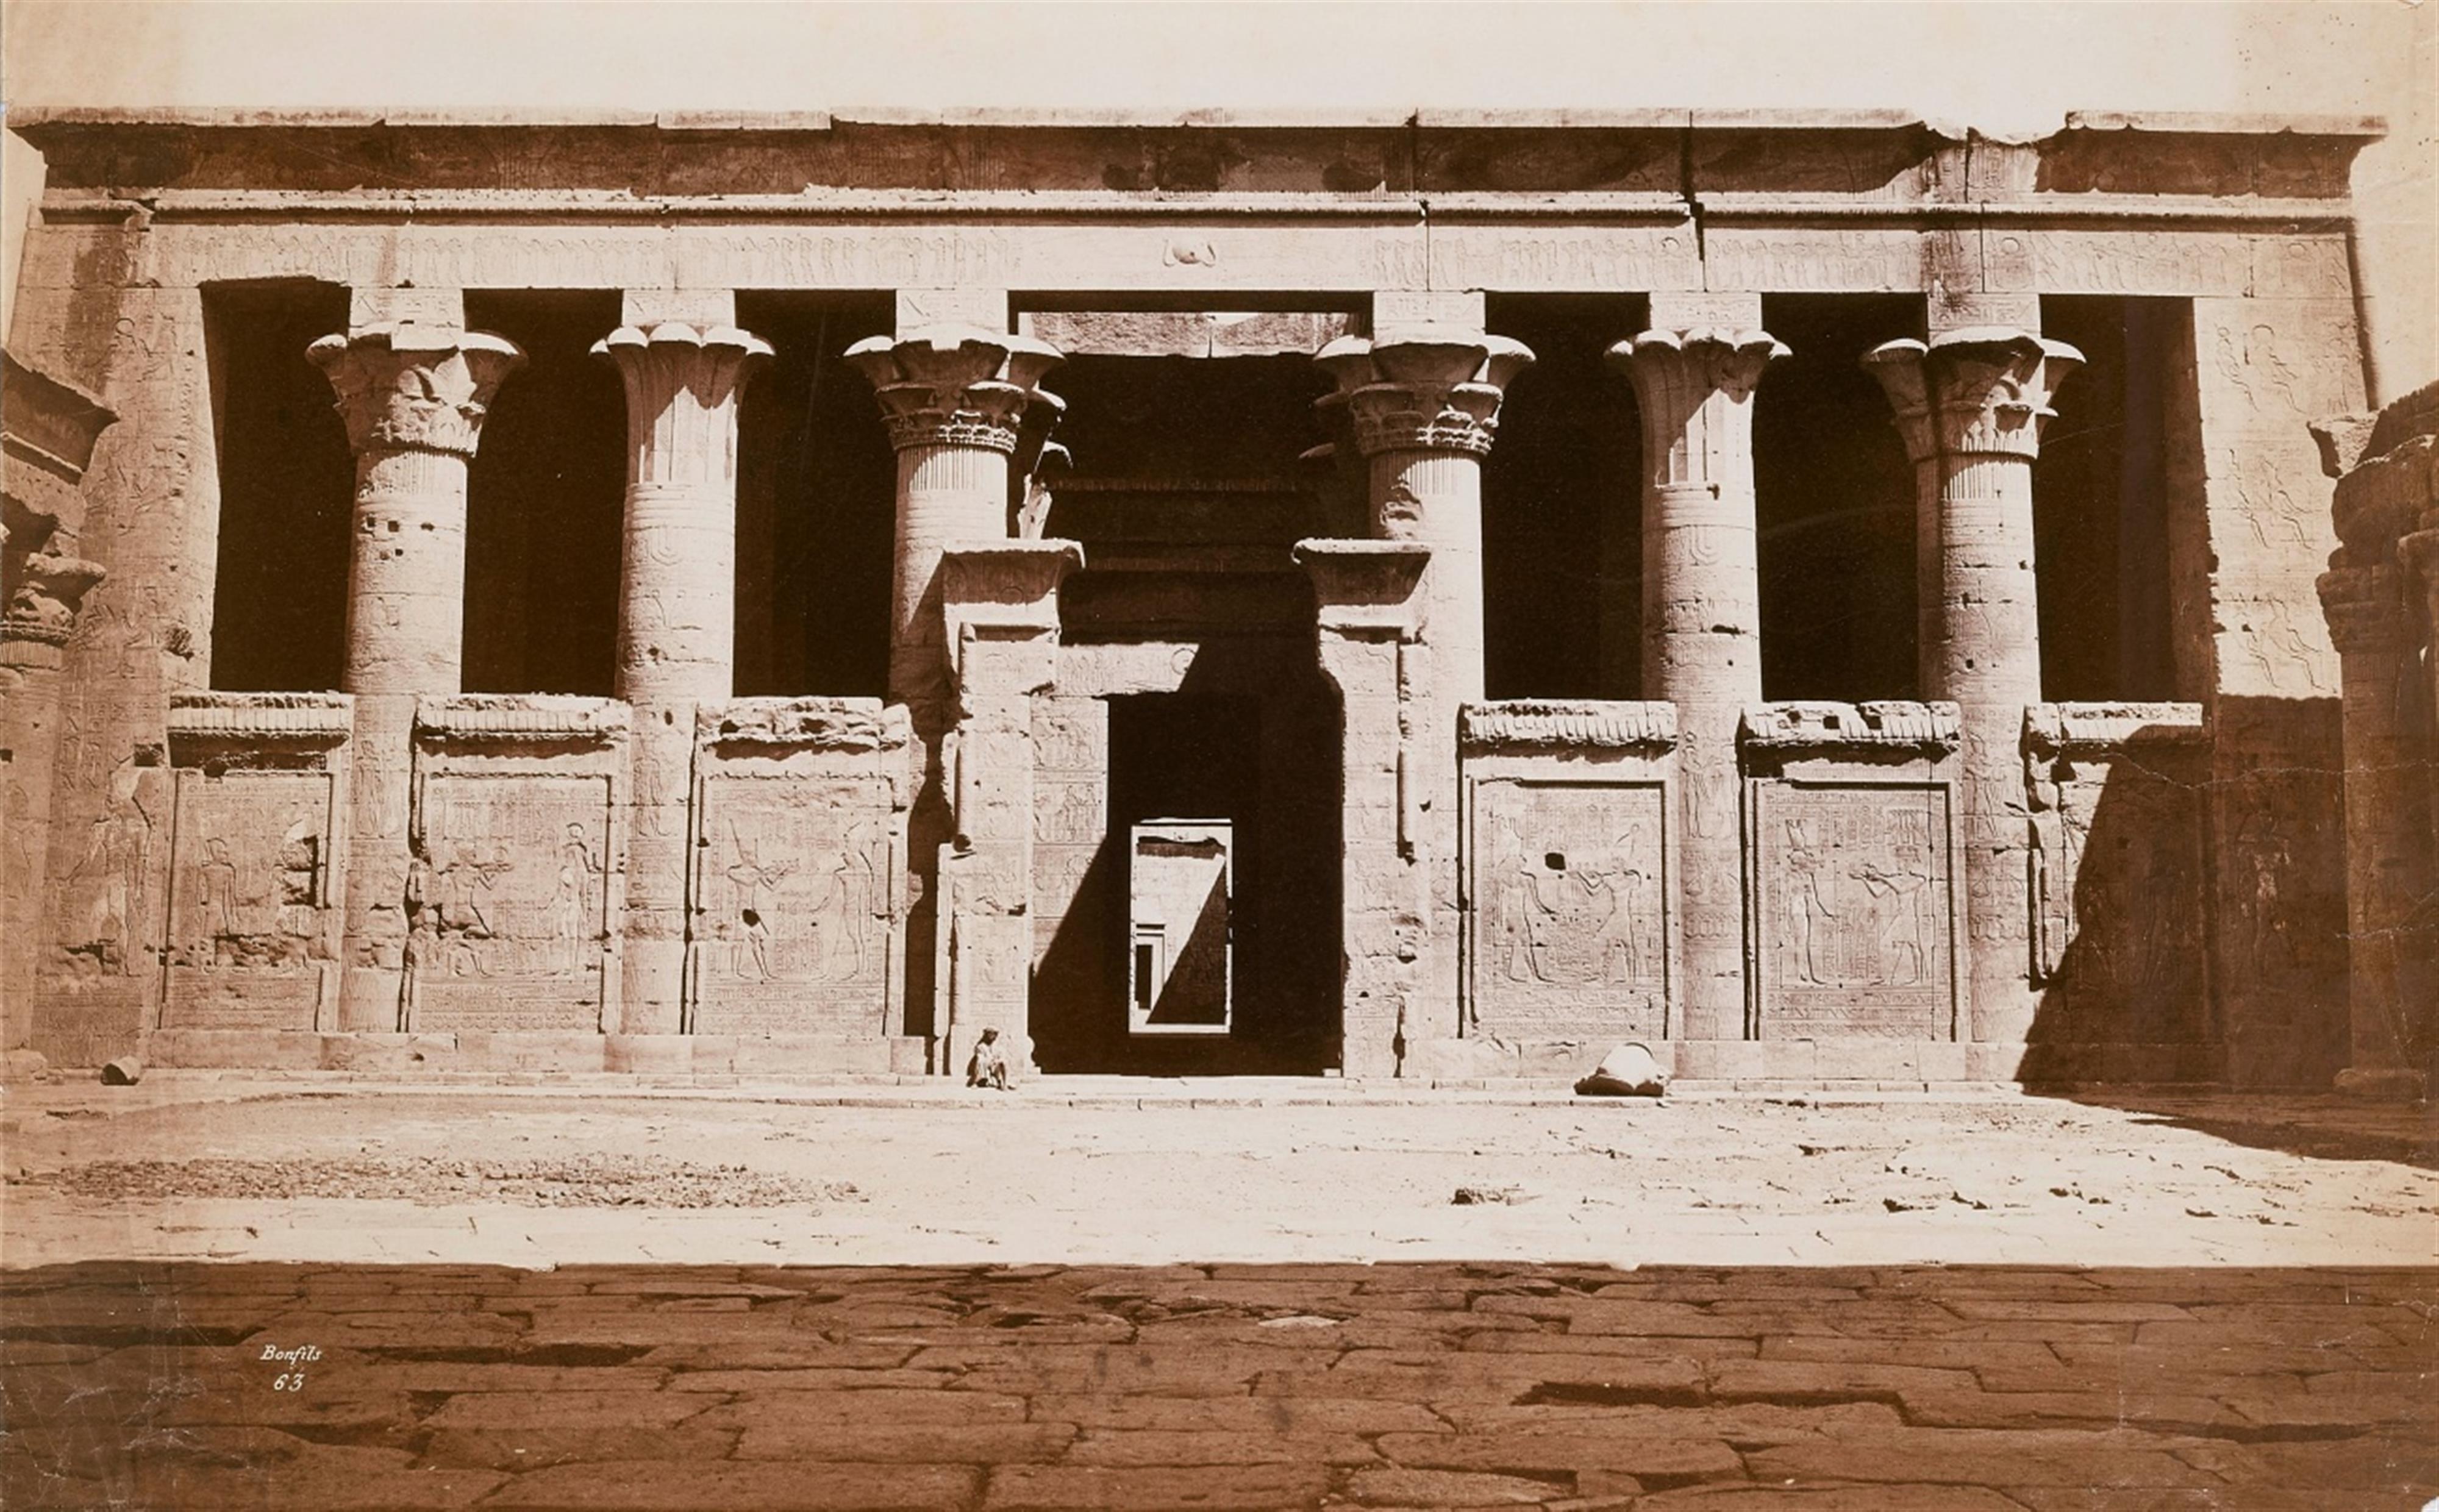 Pascal Sebah
Félix Bonfils - Untitled (Views of Egypt) - image-4